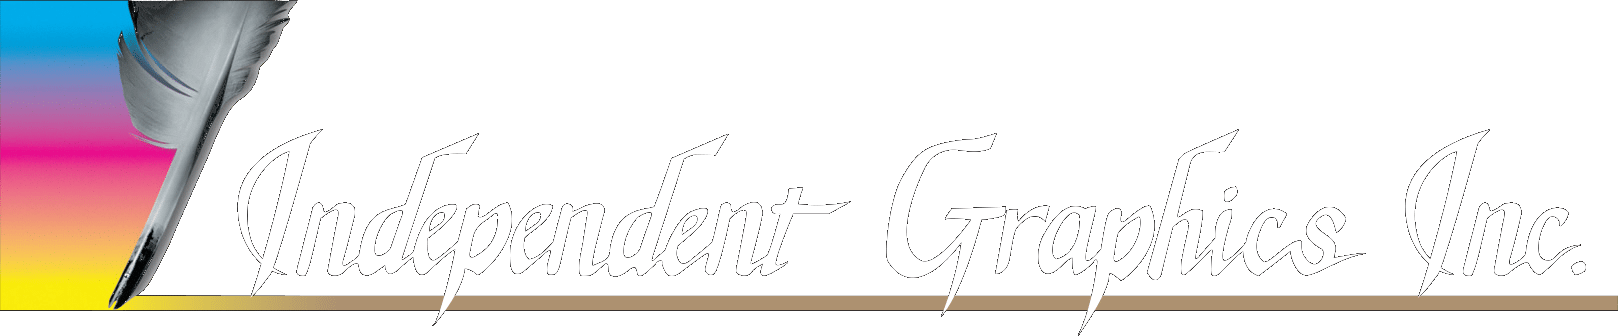 Independent Graphics logo